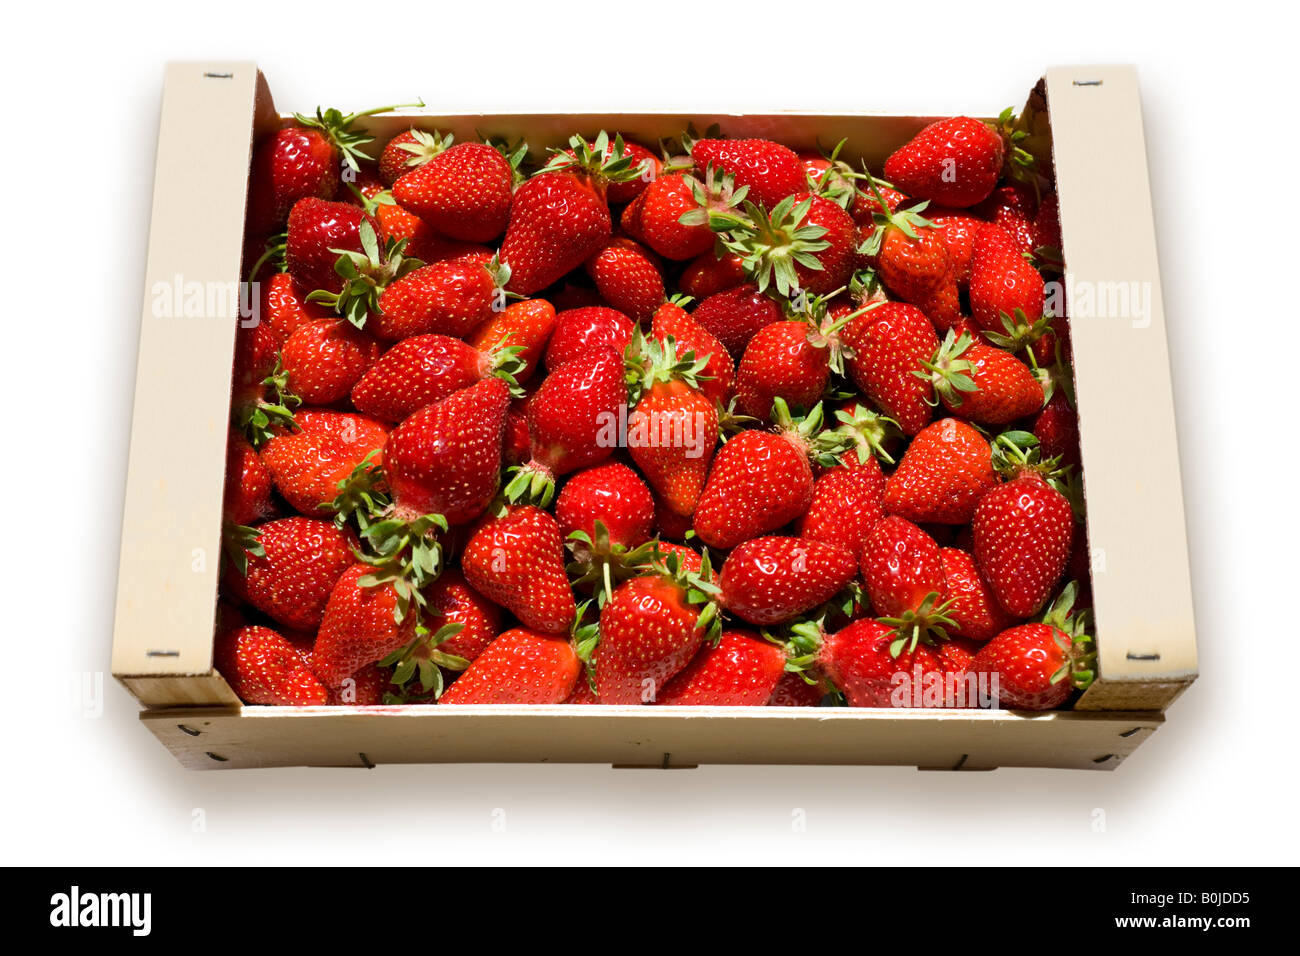 A crate full of strawberries ((Fragaria vesca). Cagette remplie de fraises (Fragaria vesca). Stock Photo